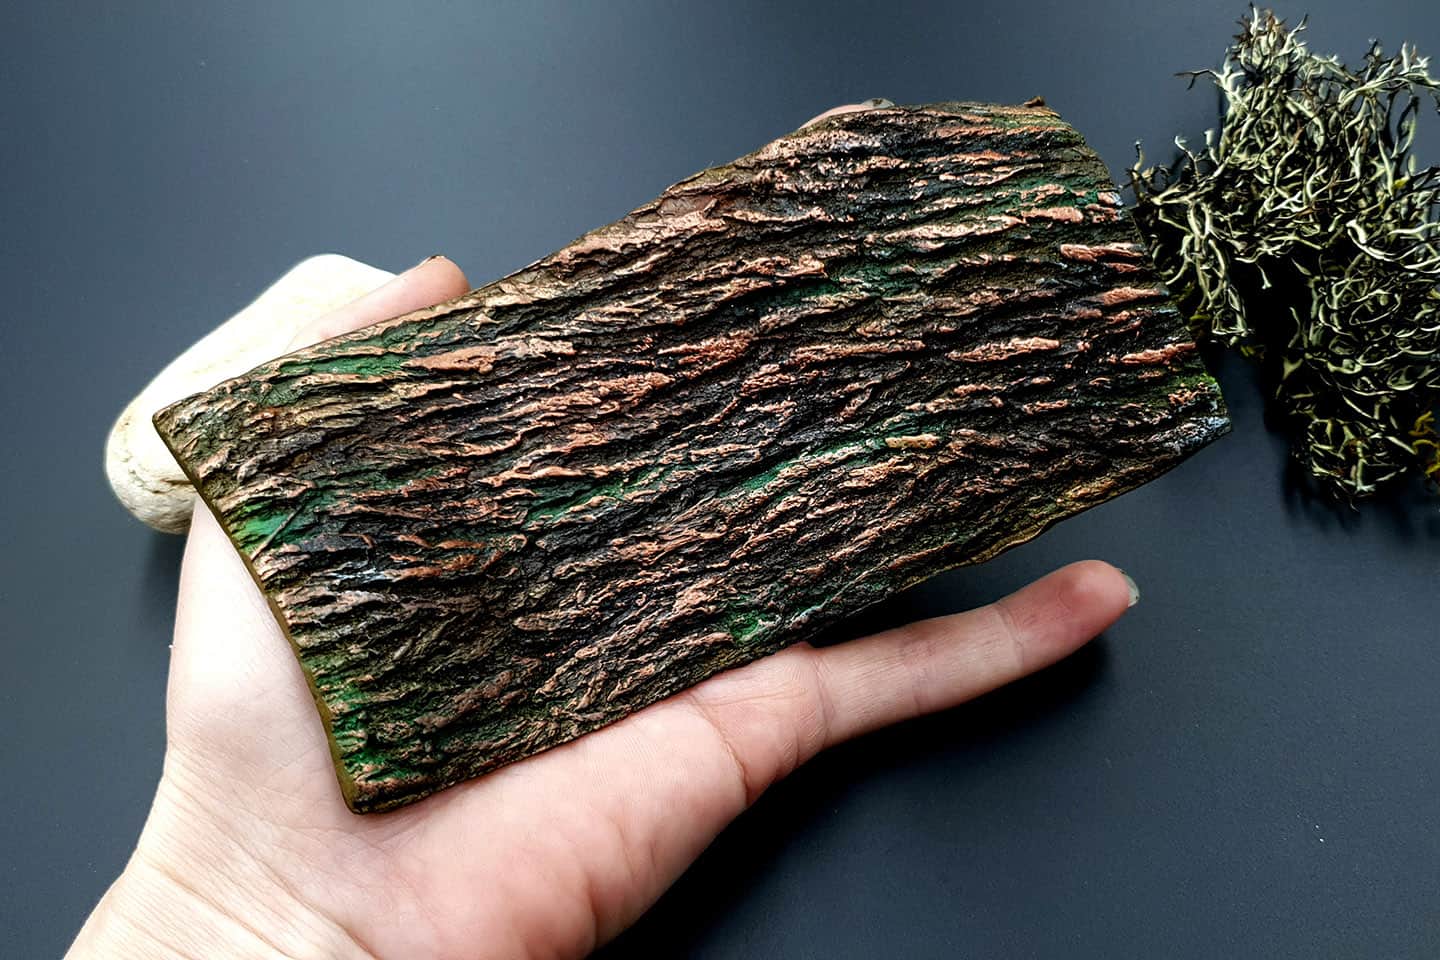 Silicone Texture Bark of Thai Pine Tree #2 (13127)